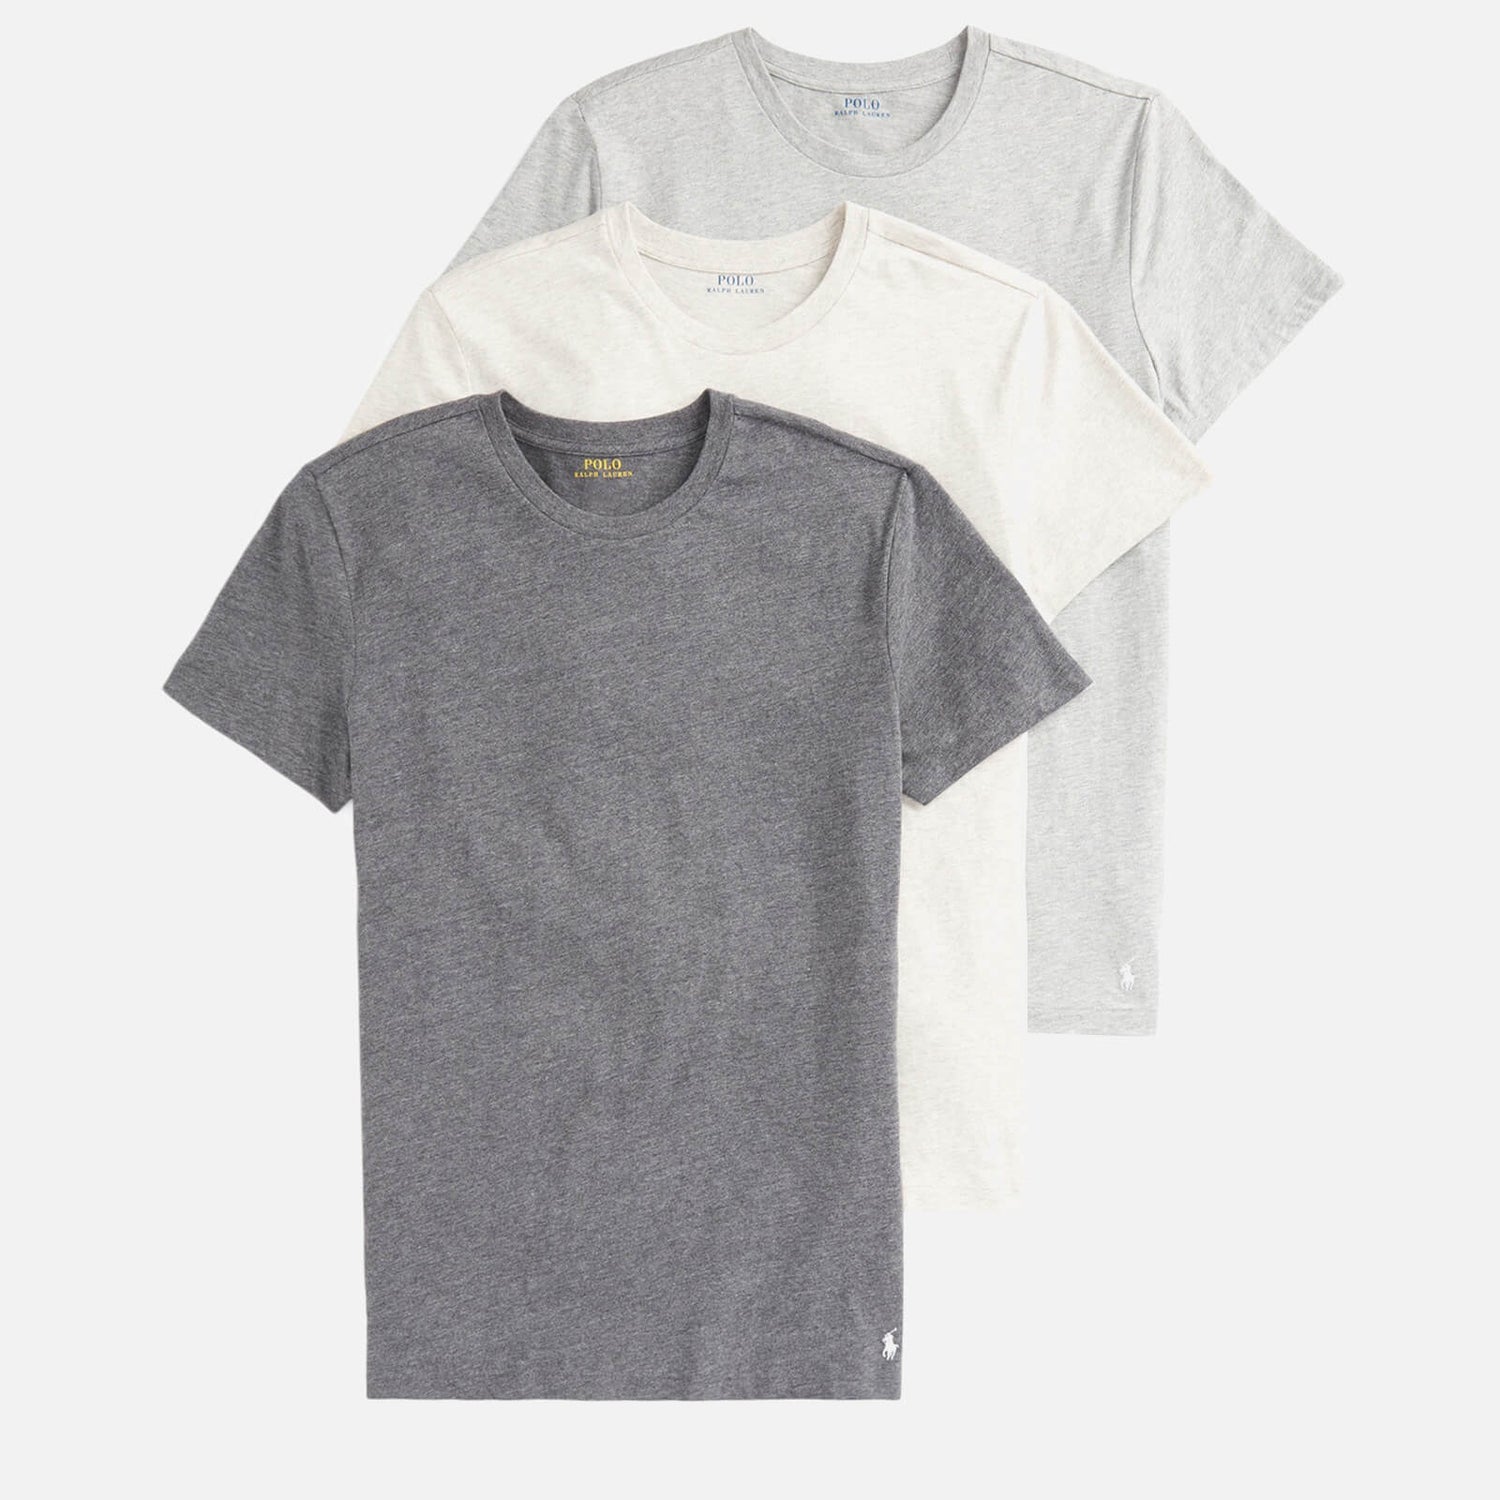 Polo Ralph Lauren Men's 3-Pack T-Shirts - Andover Heather/Light Sport Grey/Charcoal Heather - S